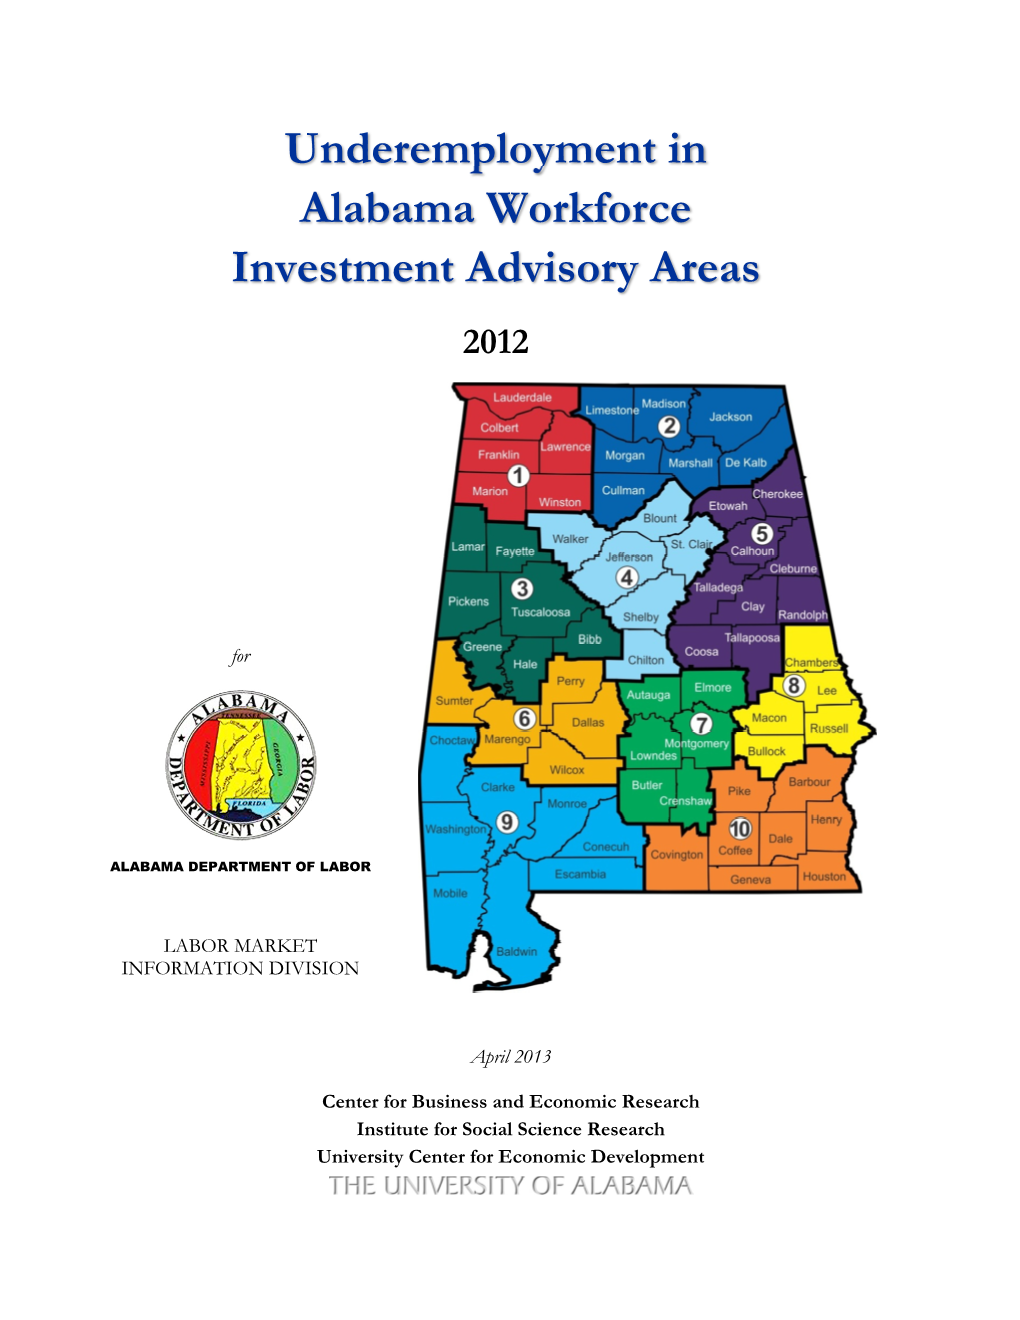 Underemployment in Alabama Workforce Investment Advisory Areas